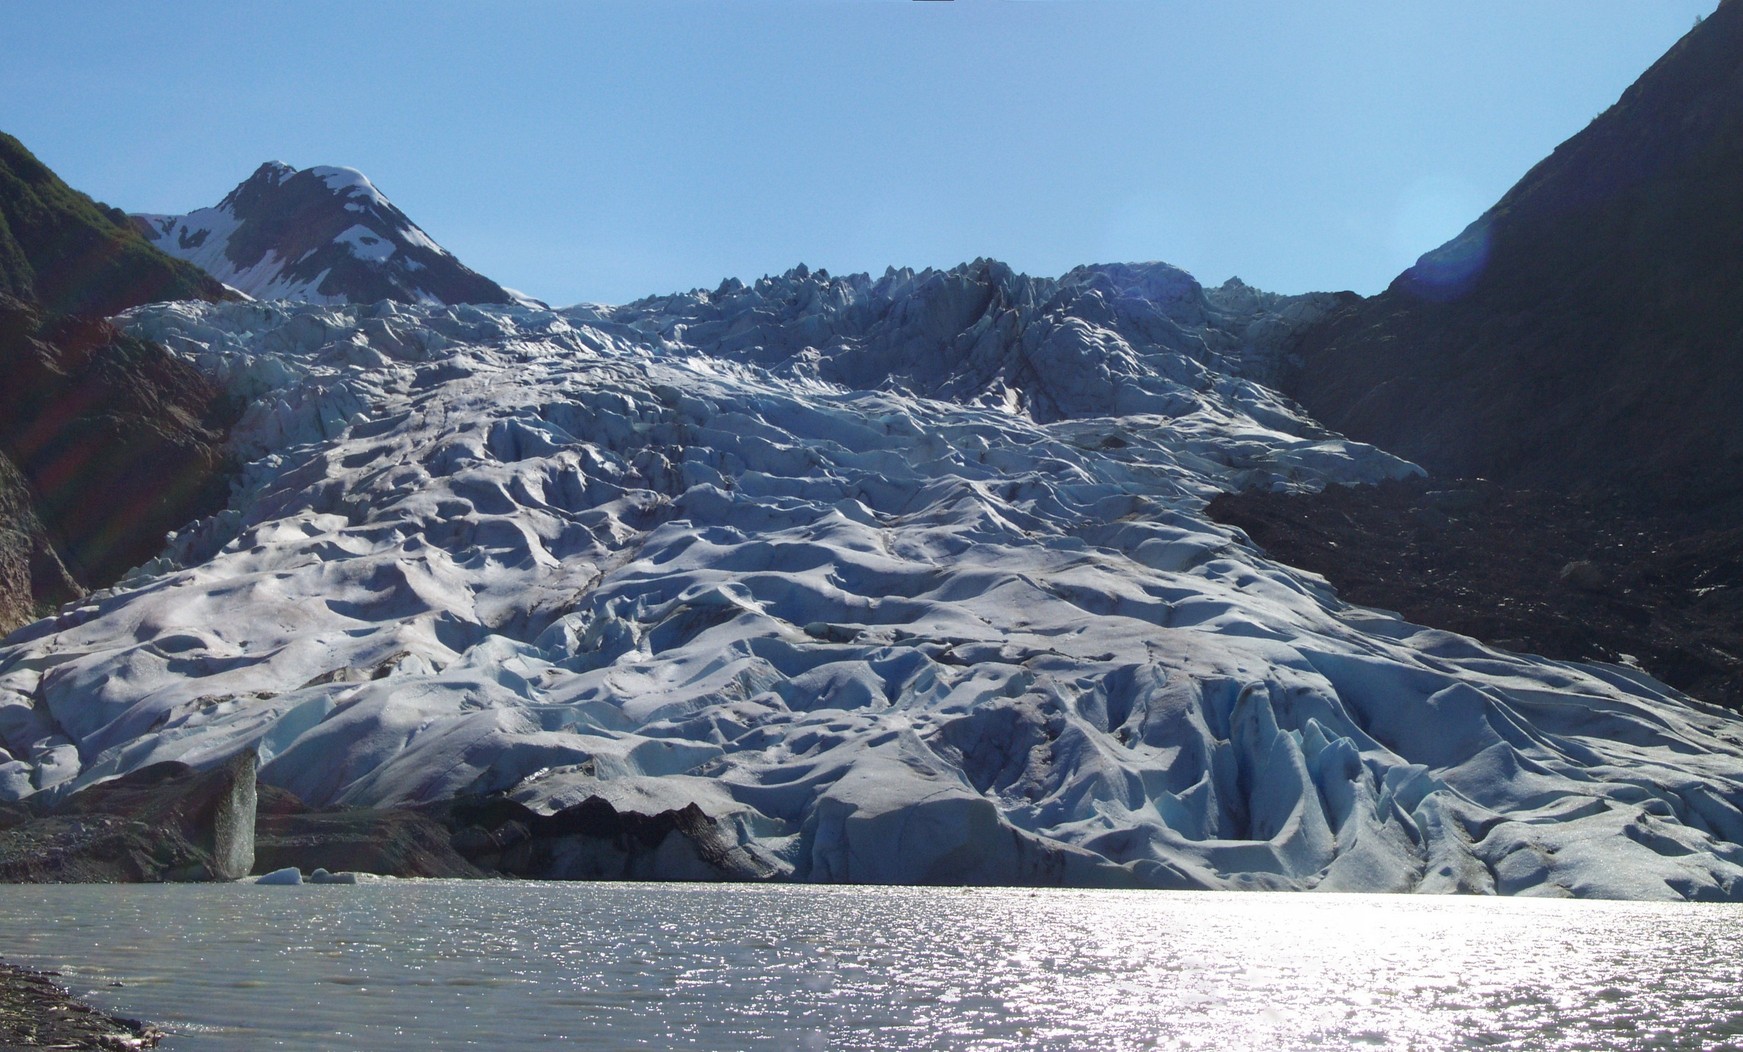 pano4_davidson_glacier_panoramic_180.jpg